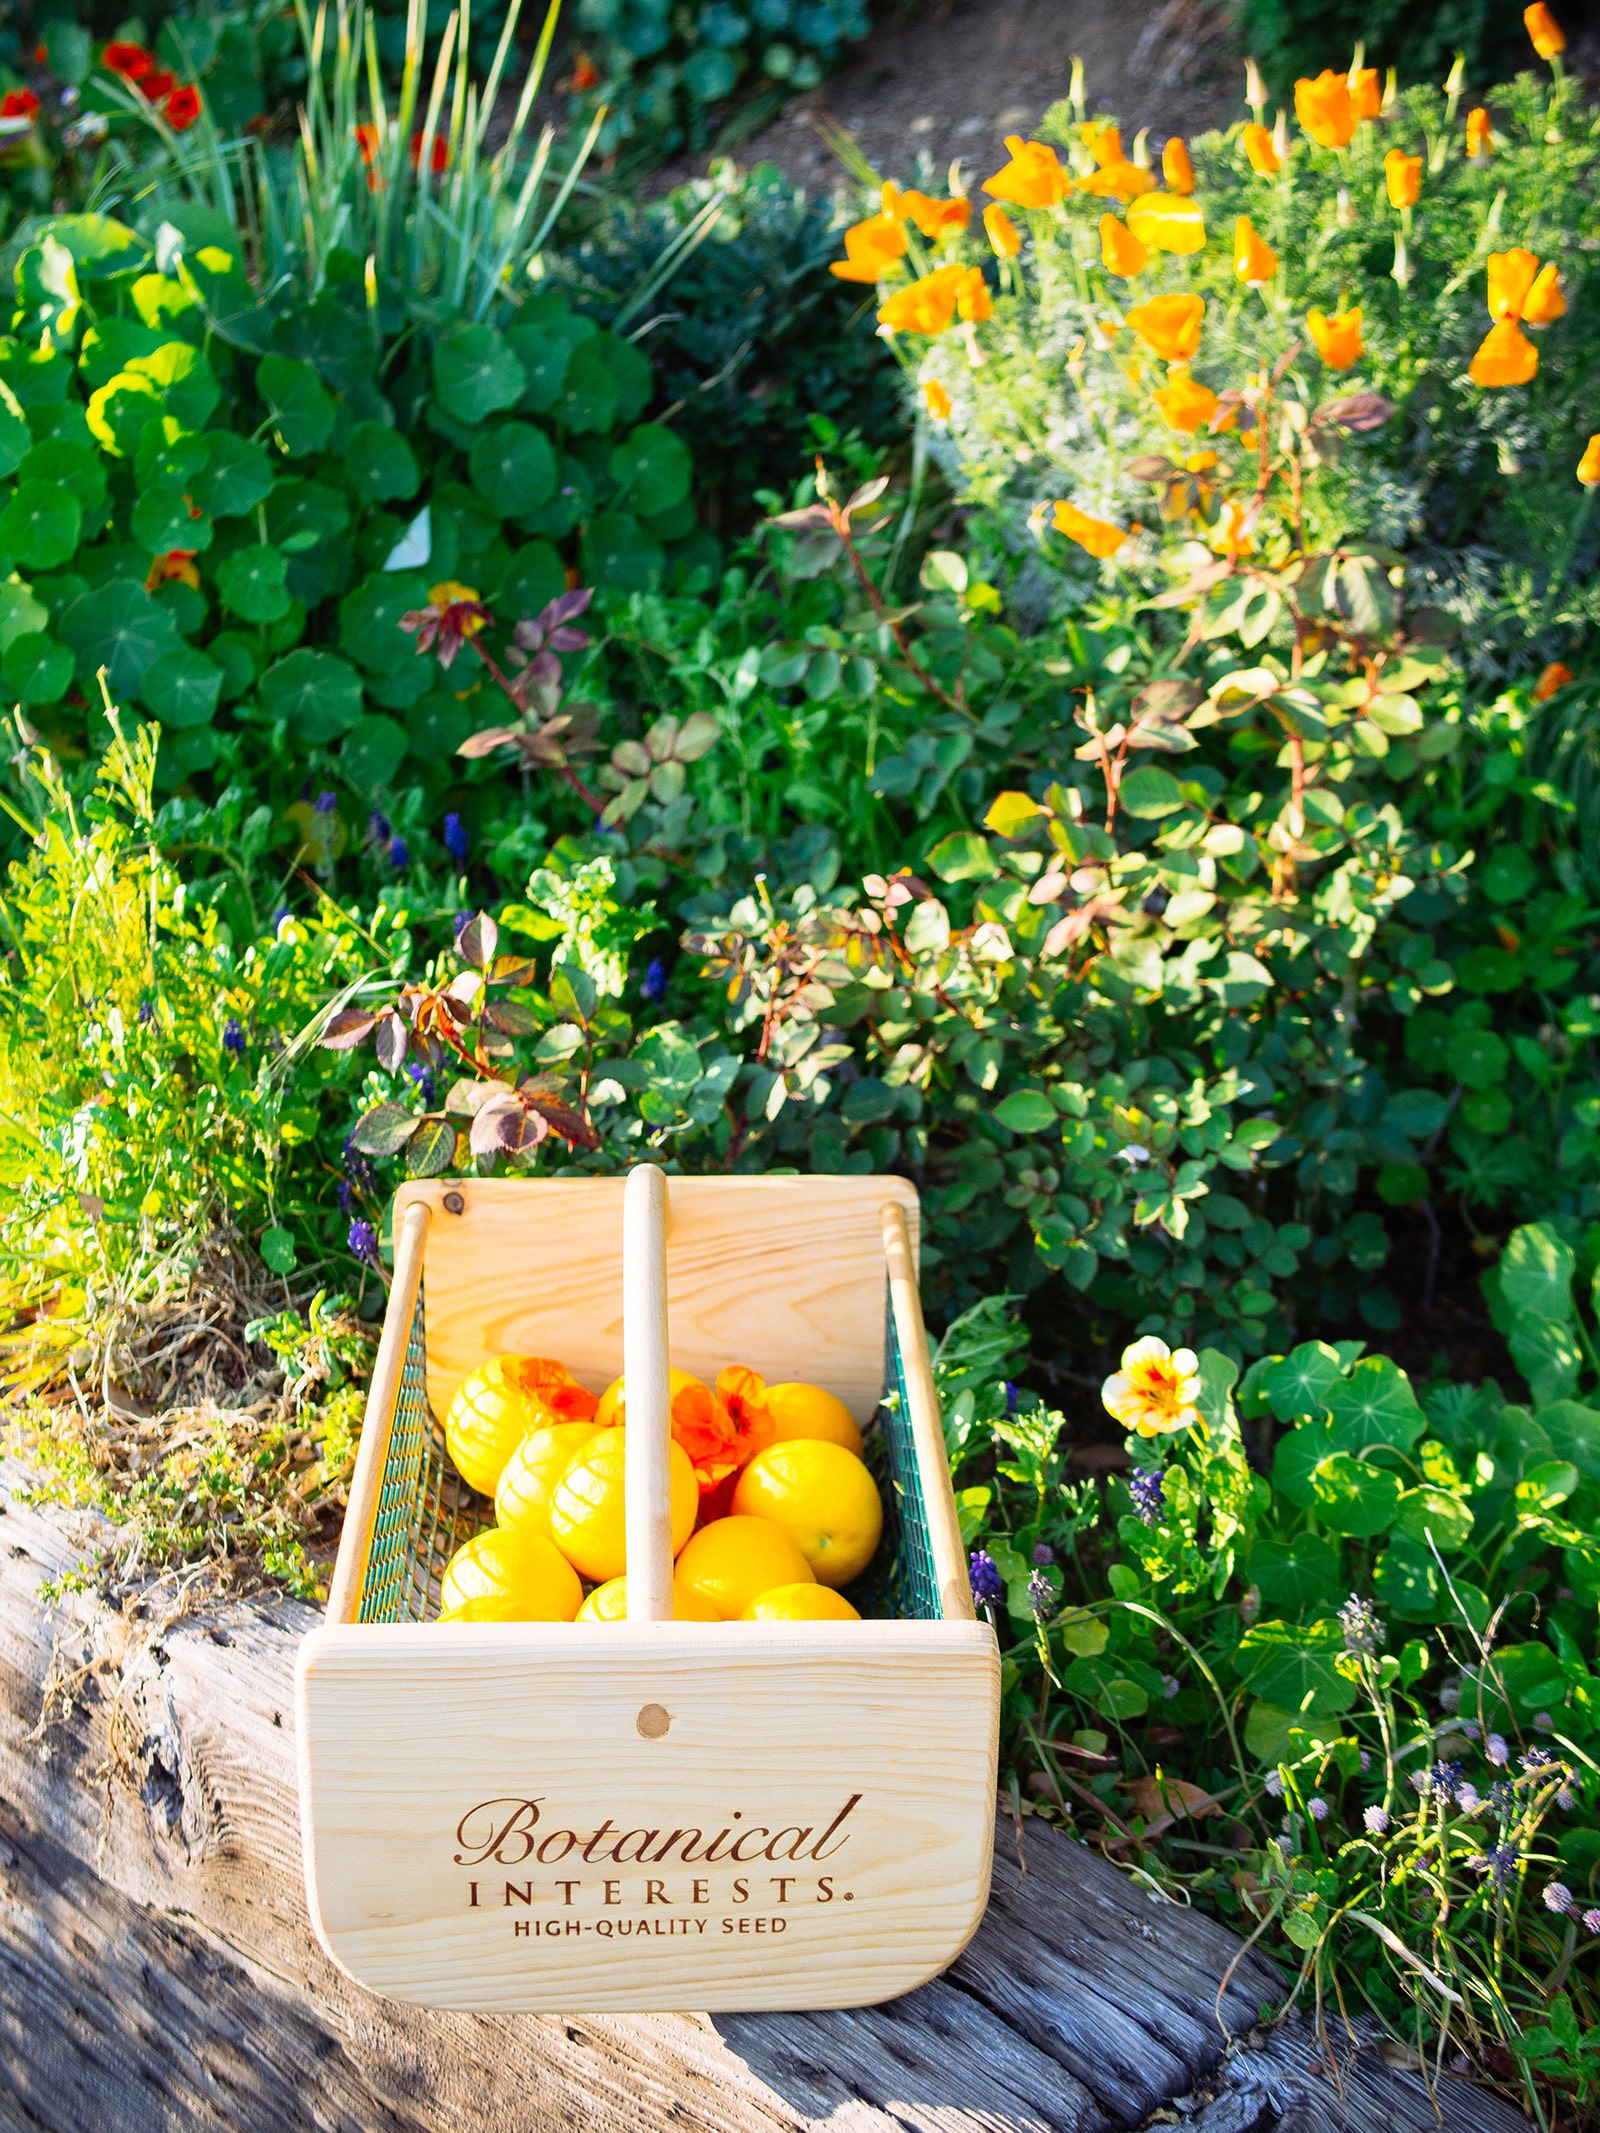 Wooden basket with Botanical Interests logo, filled with lemons, in a flower garden